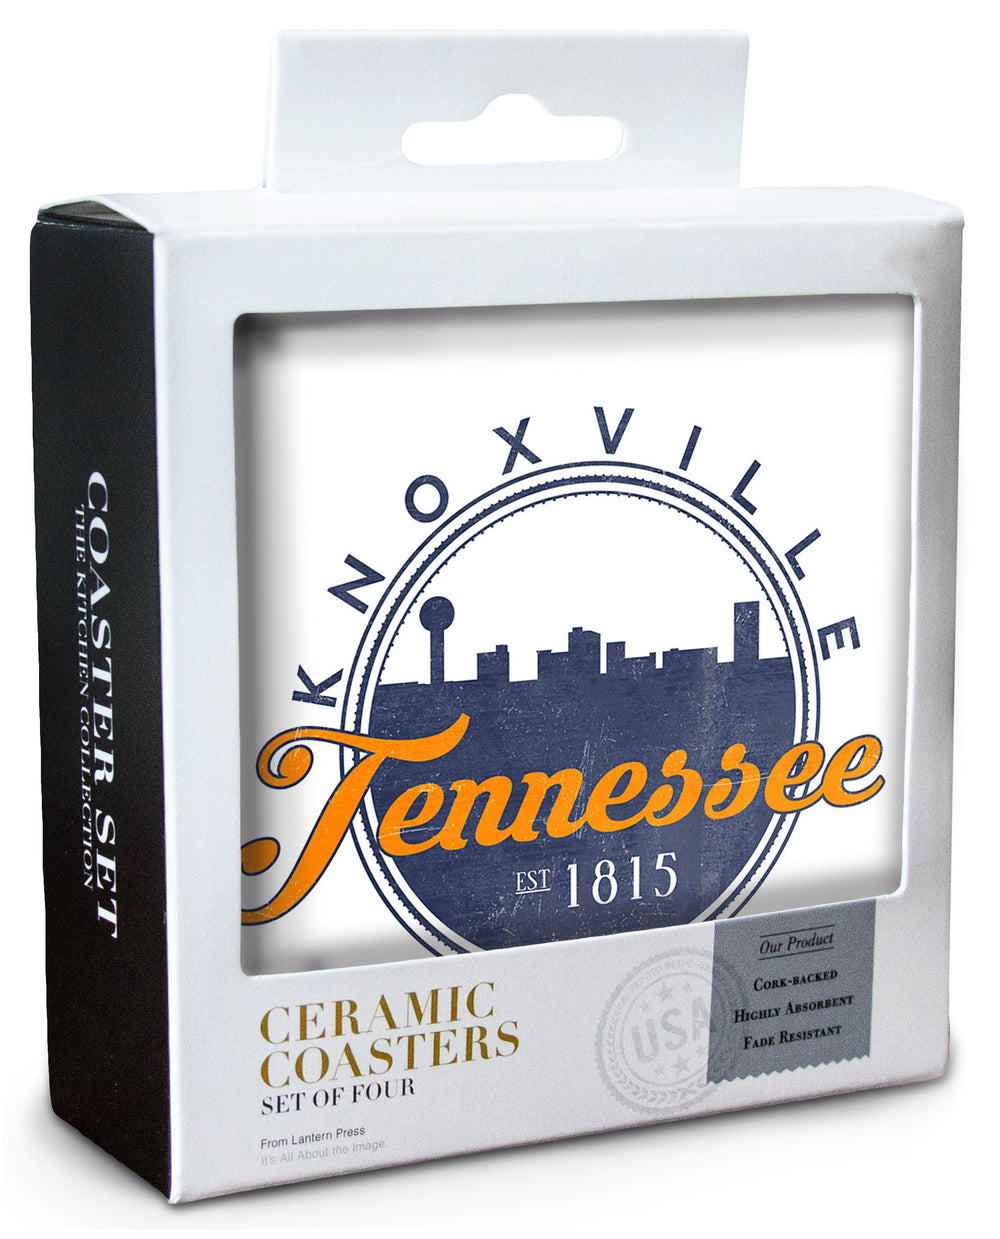 Knoxville, Tennessee, Skyline Badge, Orange & Blue, Contour, Lantern Press Artwork, Coaster Set Coasters Lantern Press 